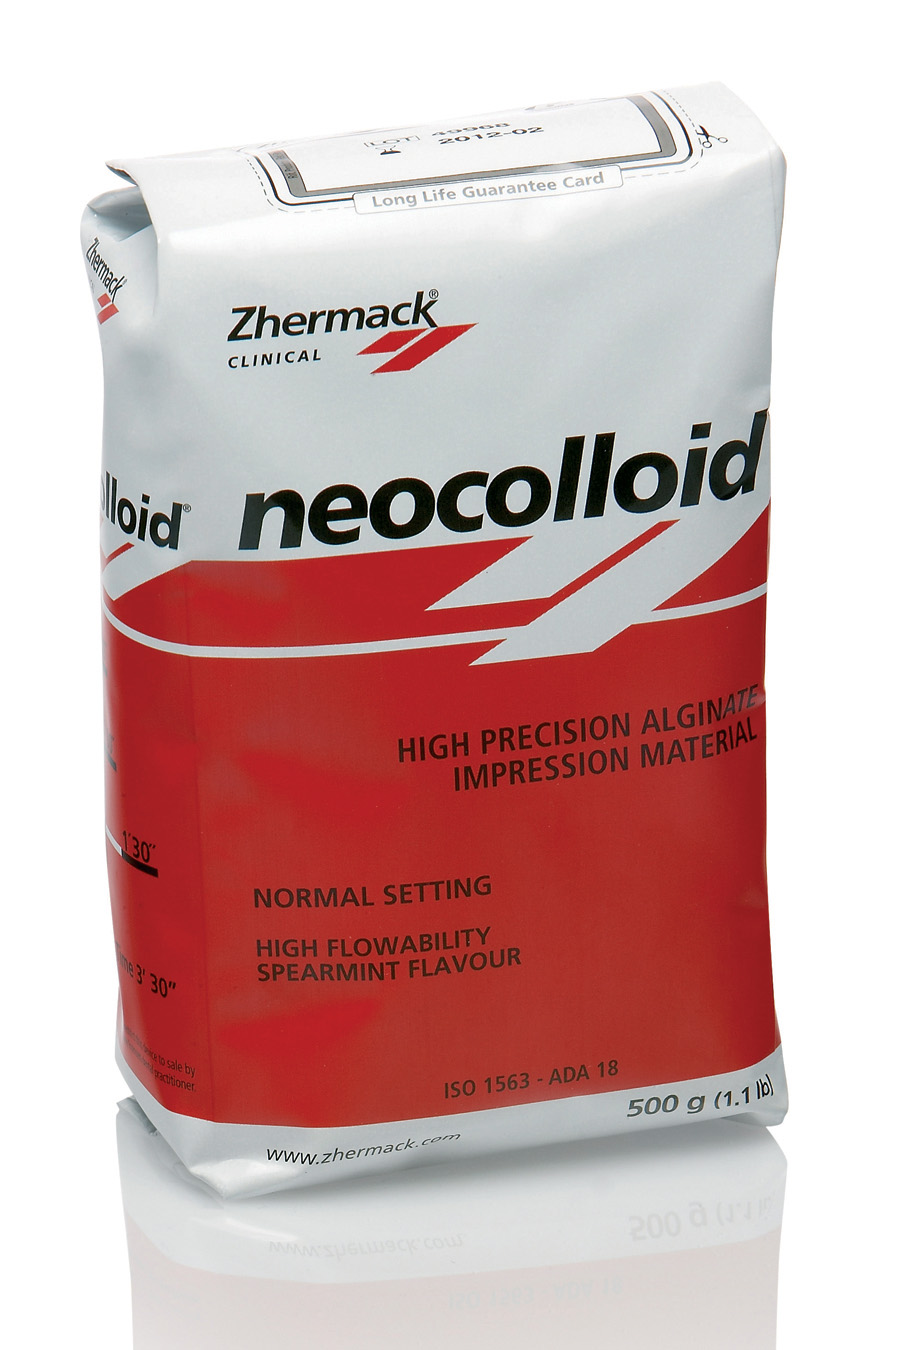 Zhermack-Neocolloid-Alginate-500Gm-Bag